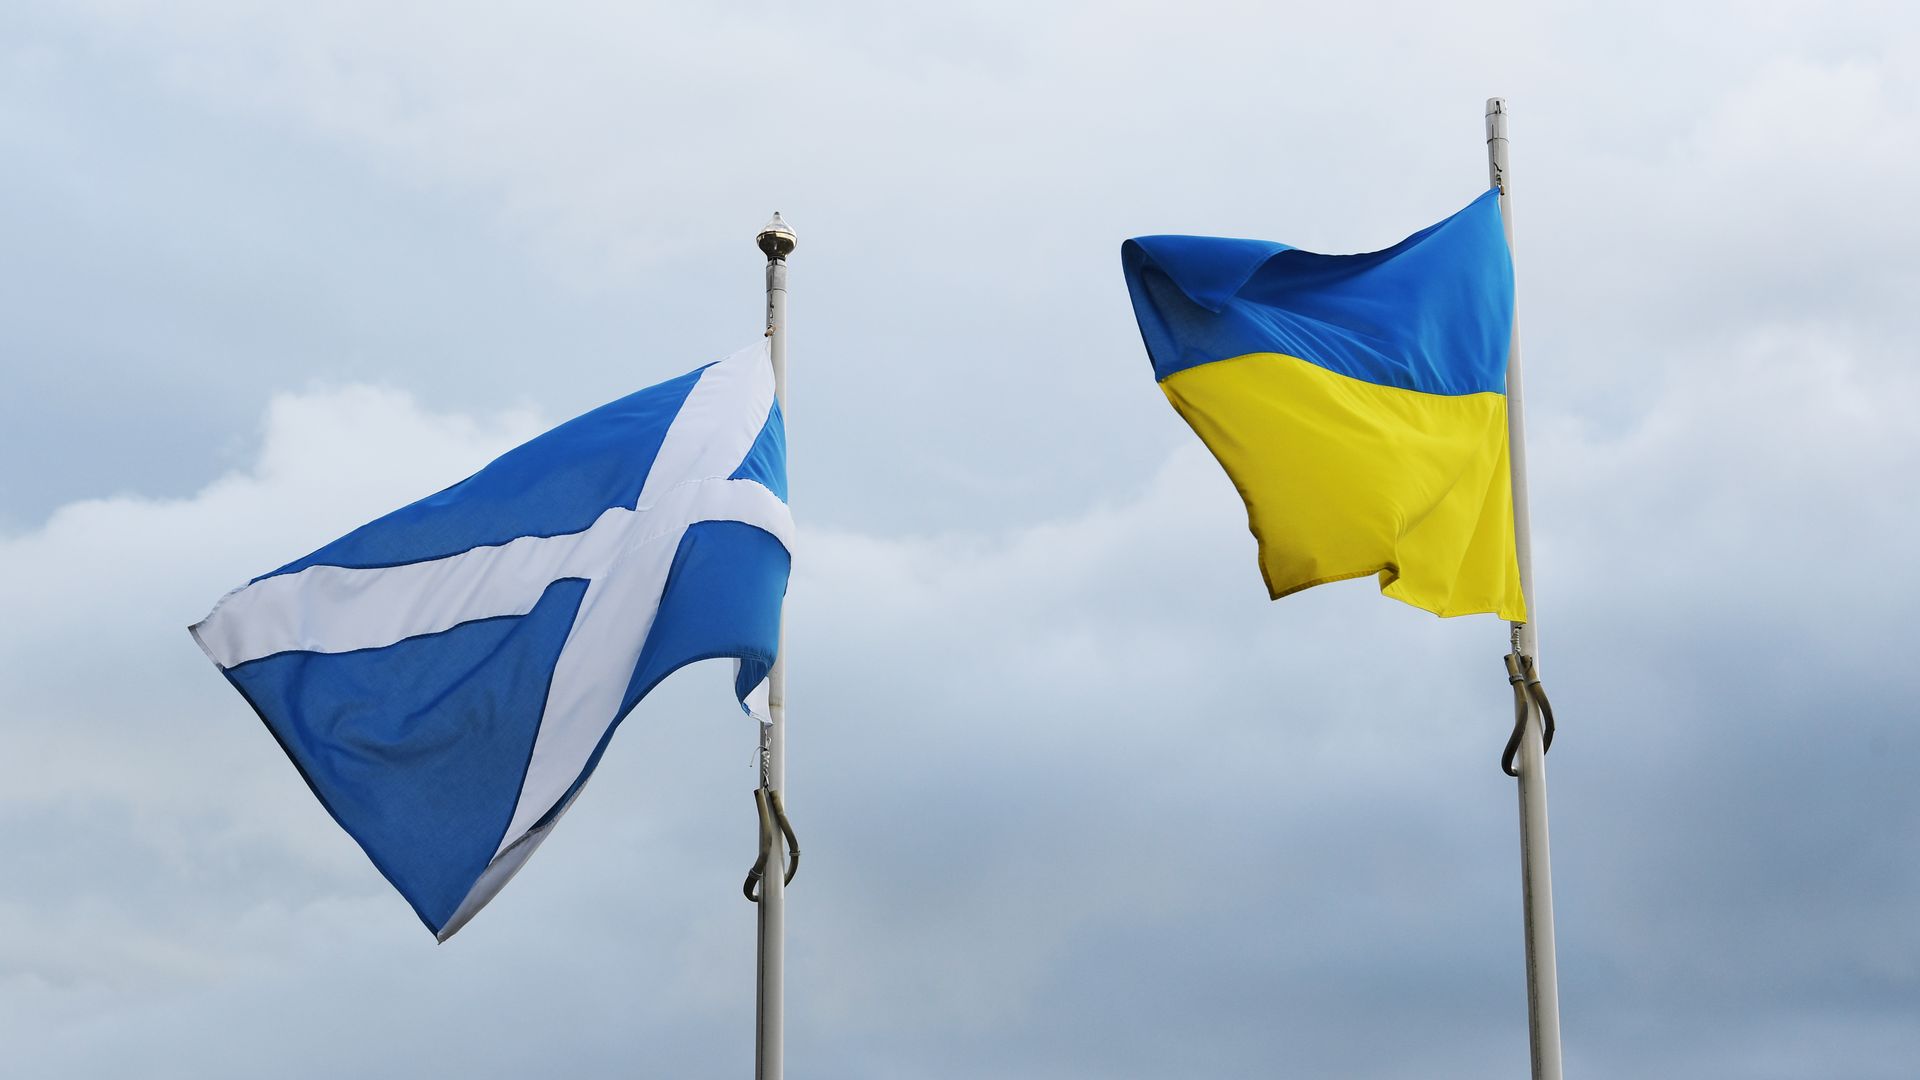 Ukraine and Scotland flags